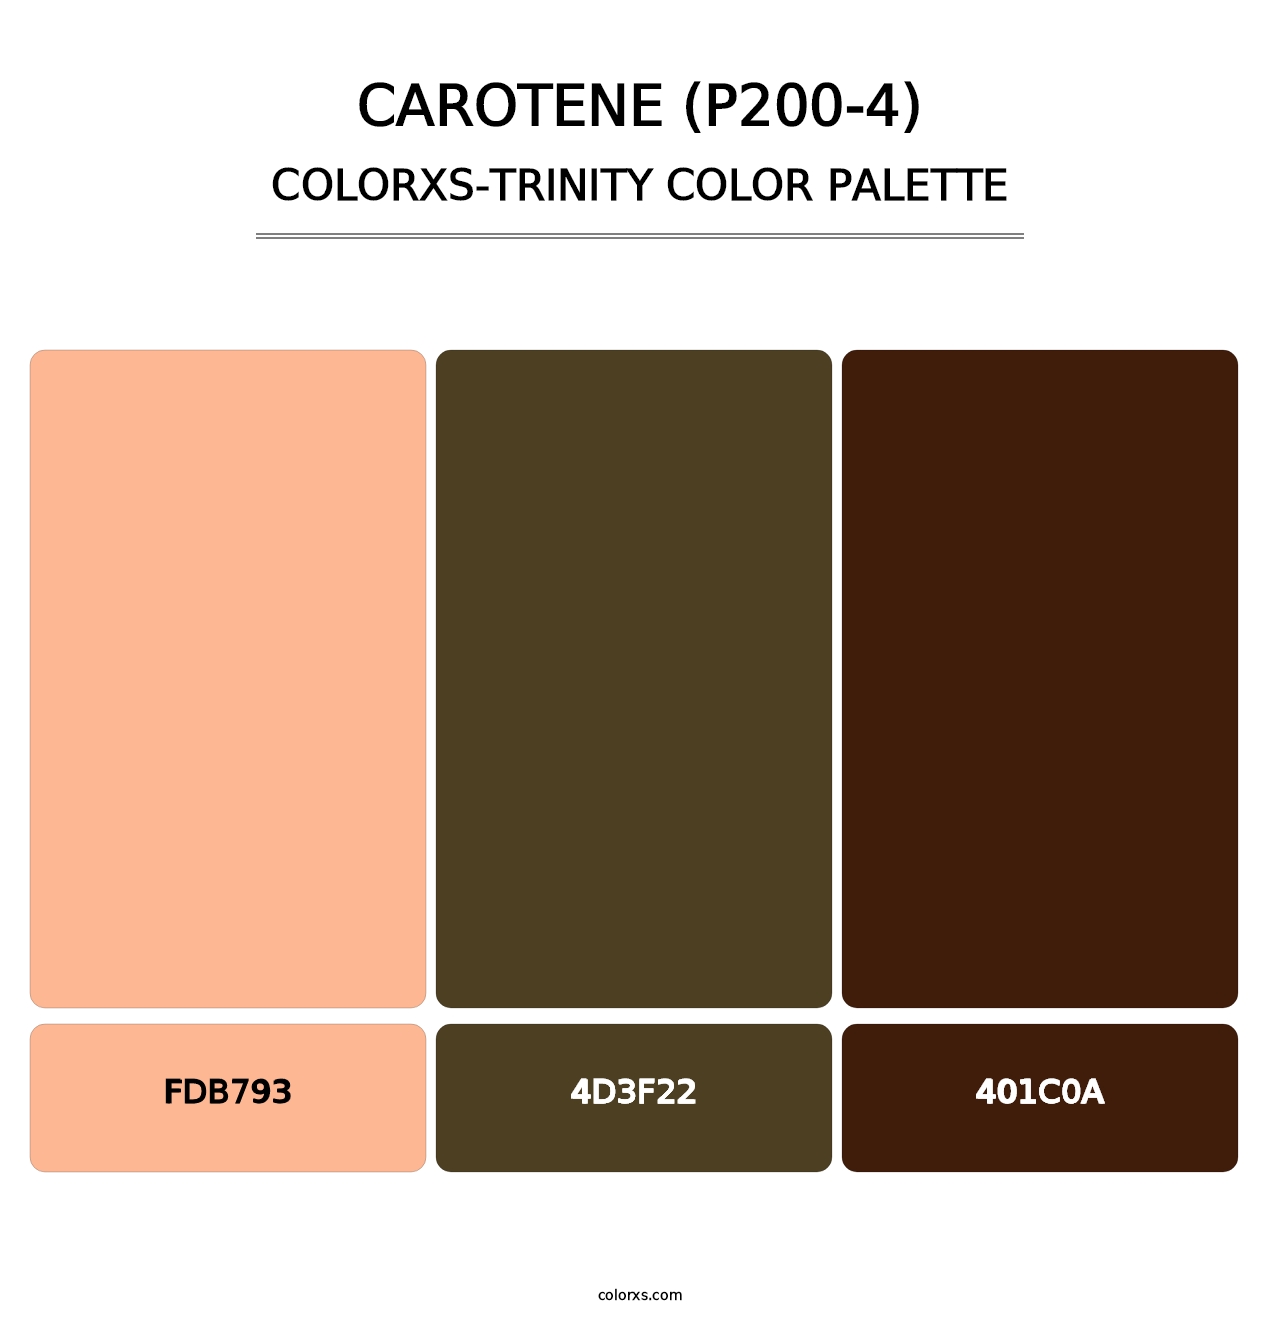 Carotene (P200-4) - Colorxs Trinity Palette